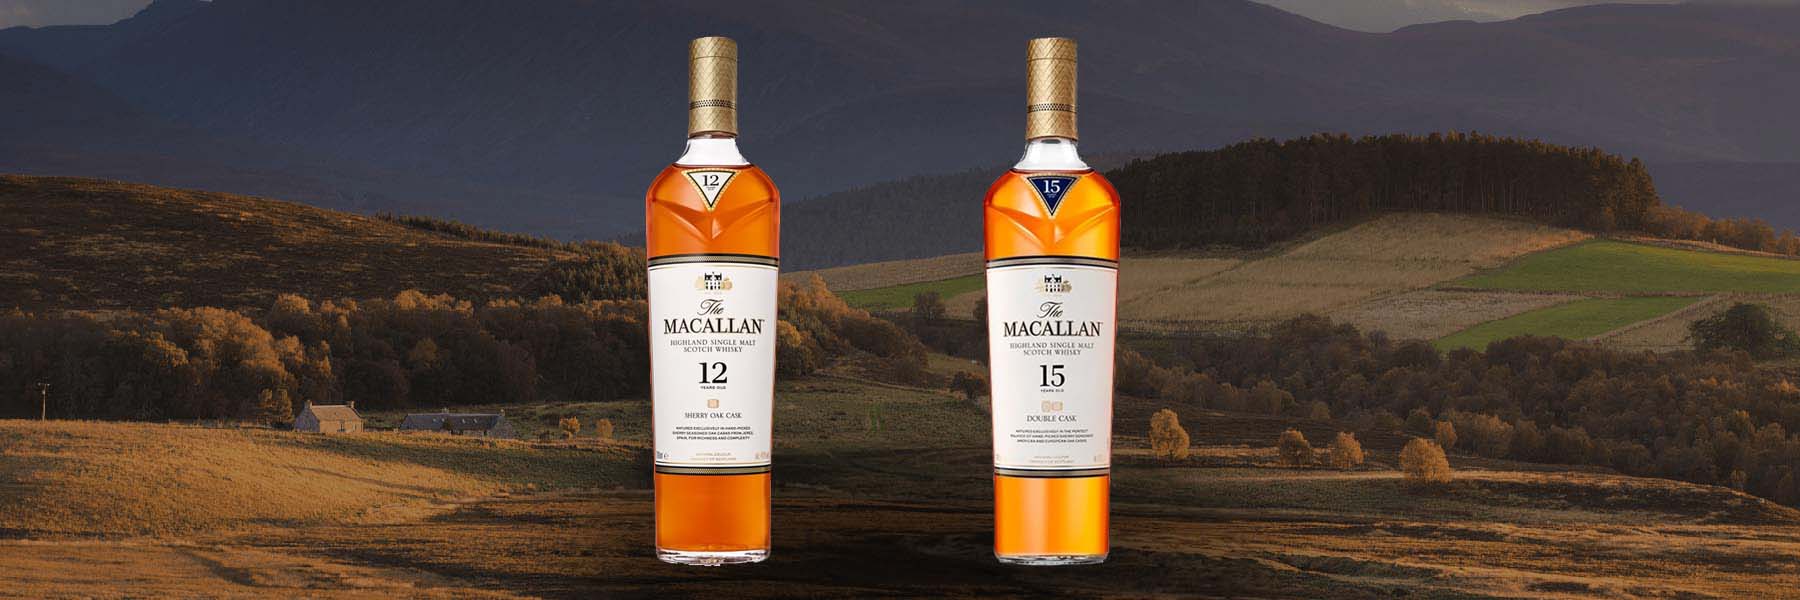 Macallan 12 vs Macallan 15 | Which is best?